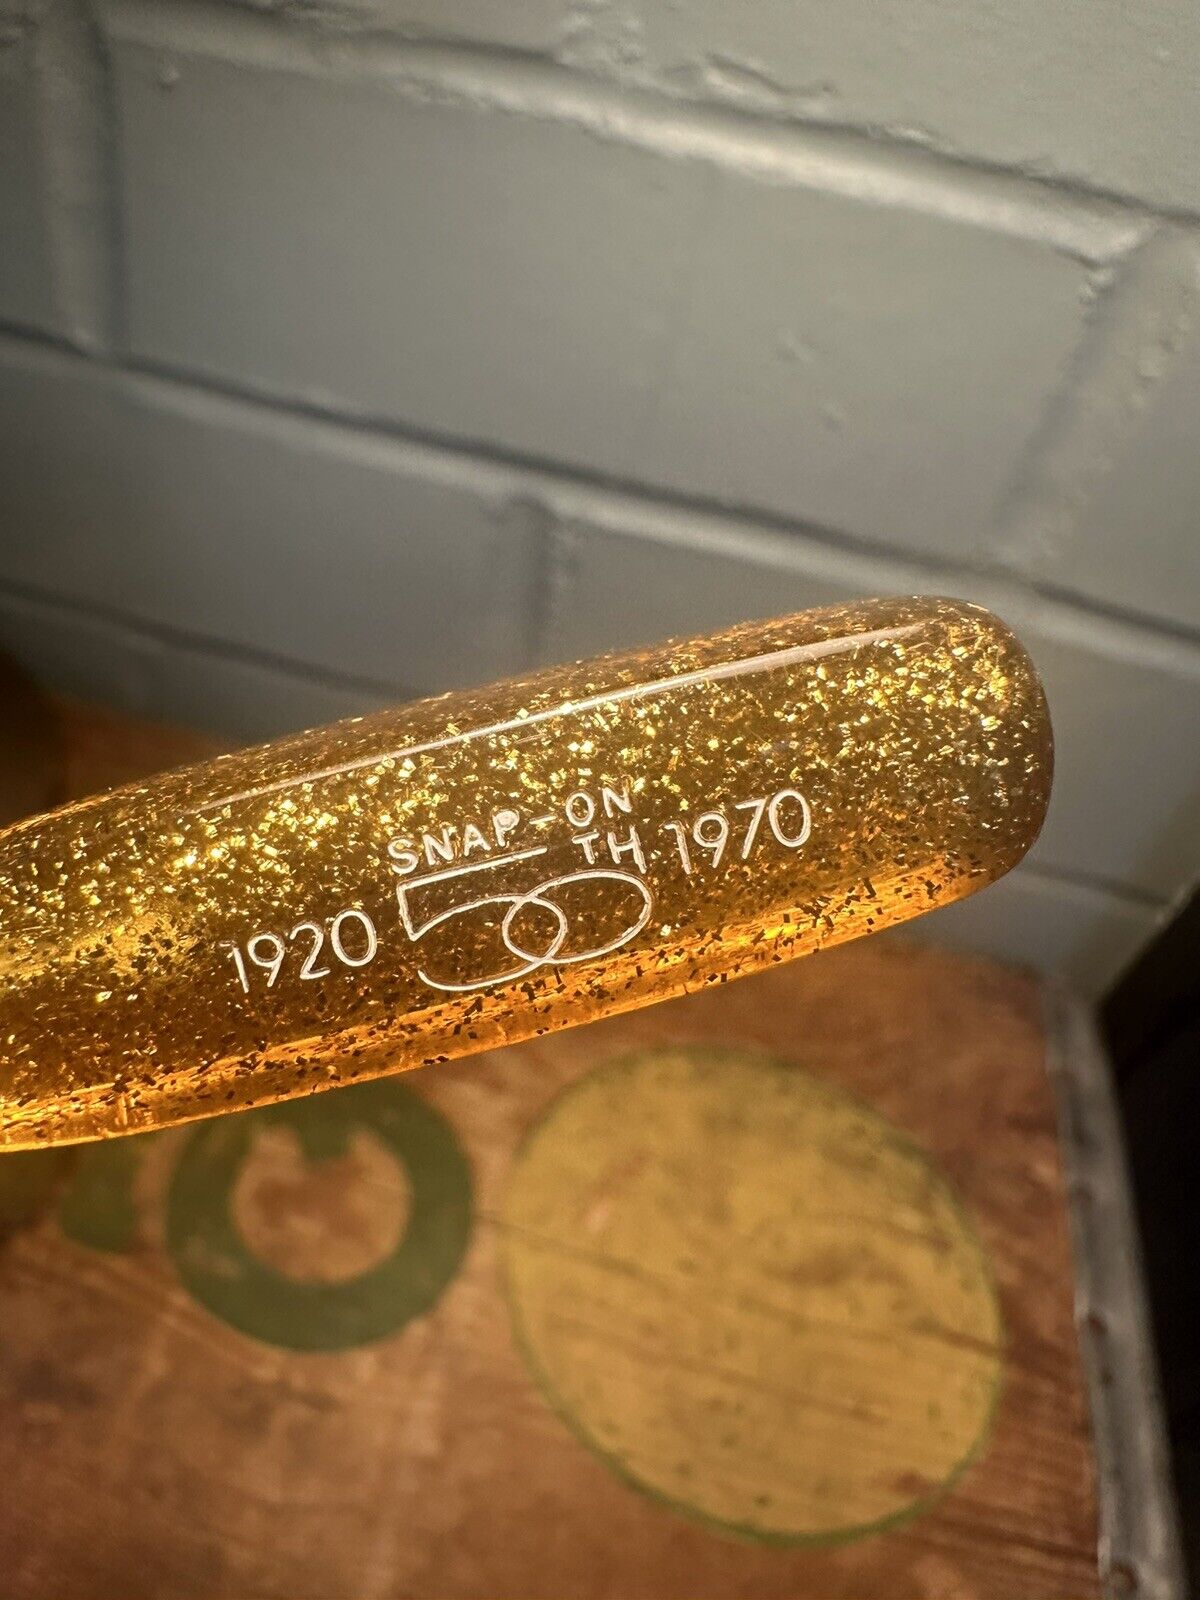 Snap-On Tools USA 50th Anniversary Gold Glitter Flat Tip Screwdriver 1920-1970